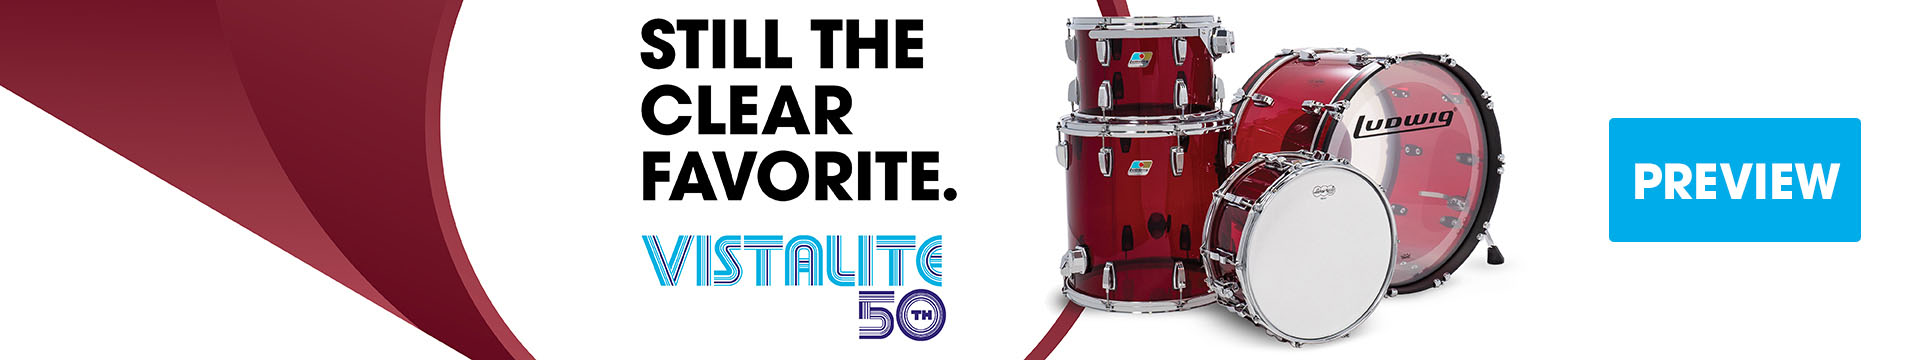 Vistalite 50th Anniversary